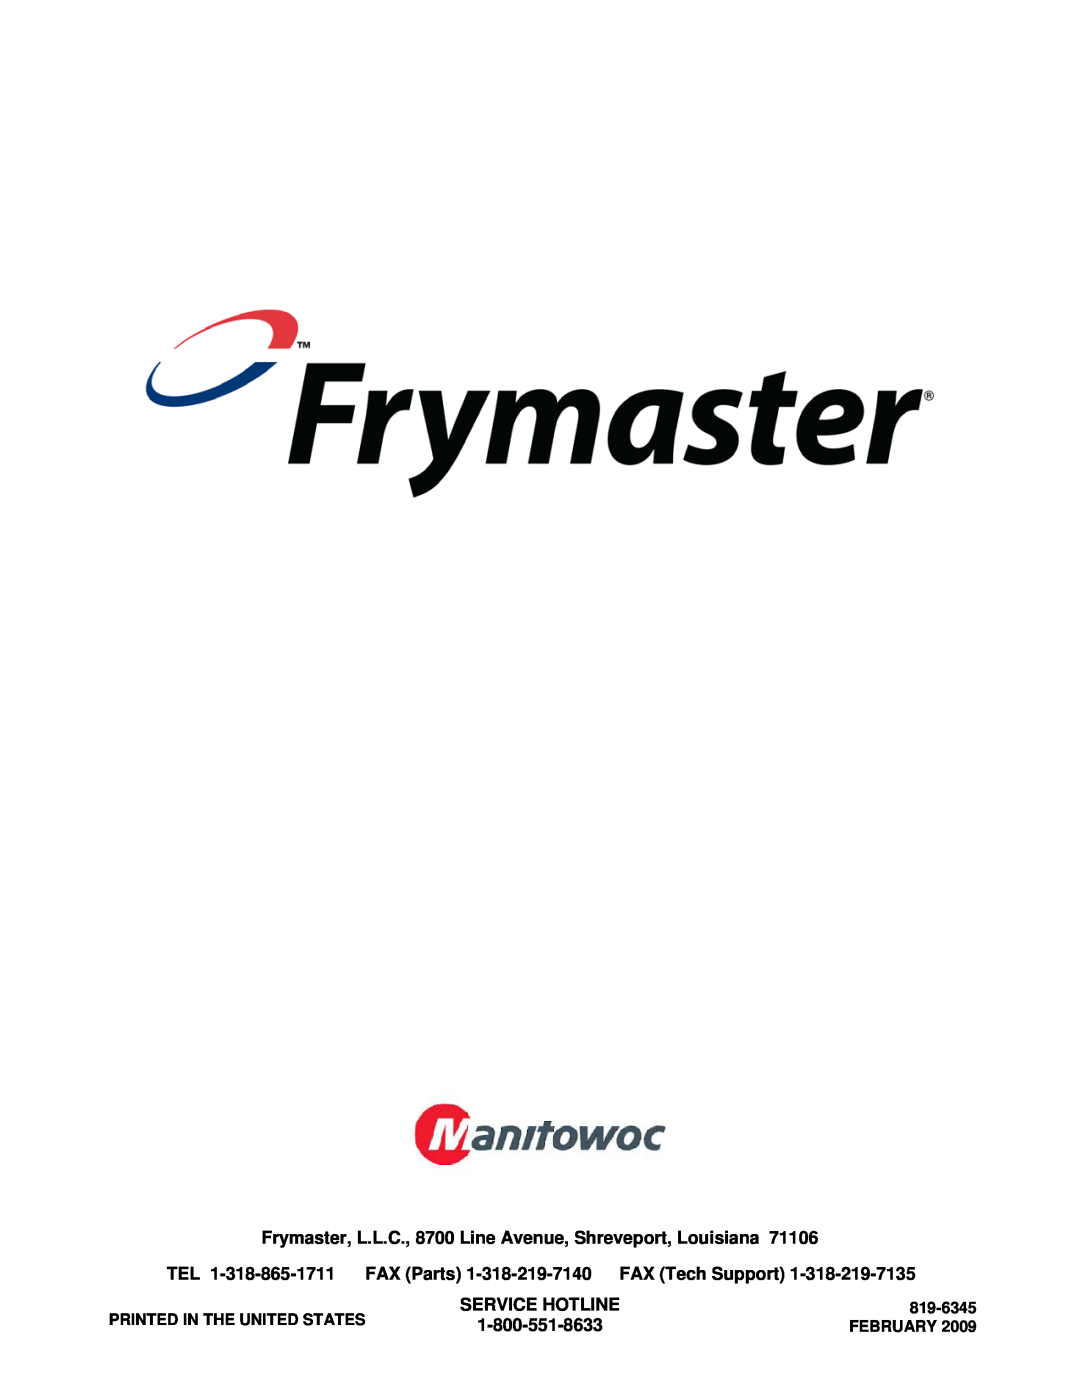 Frymaster 8196345 manual Service Hotline, 819-6345, February 